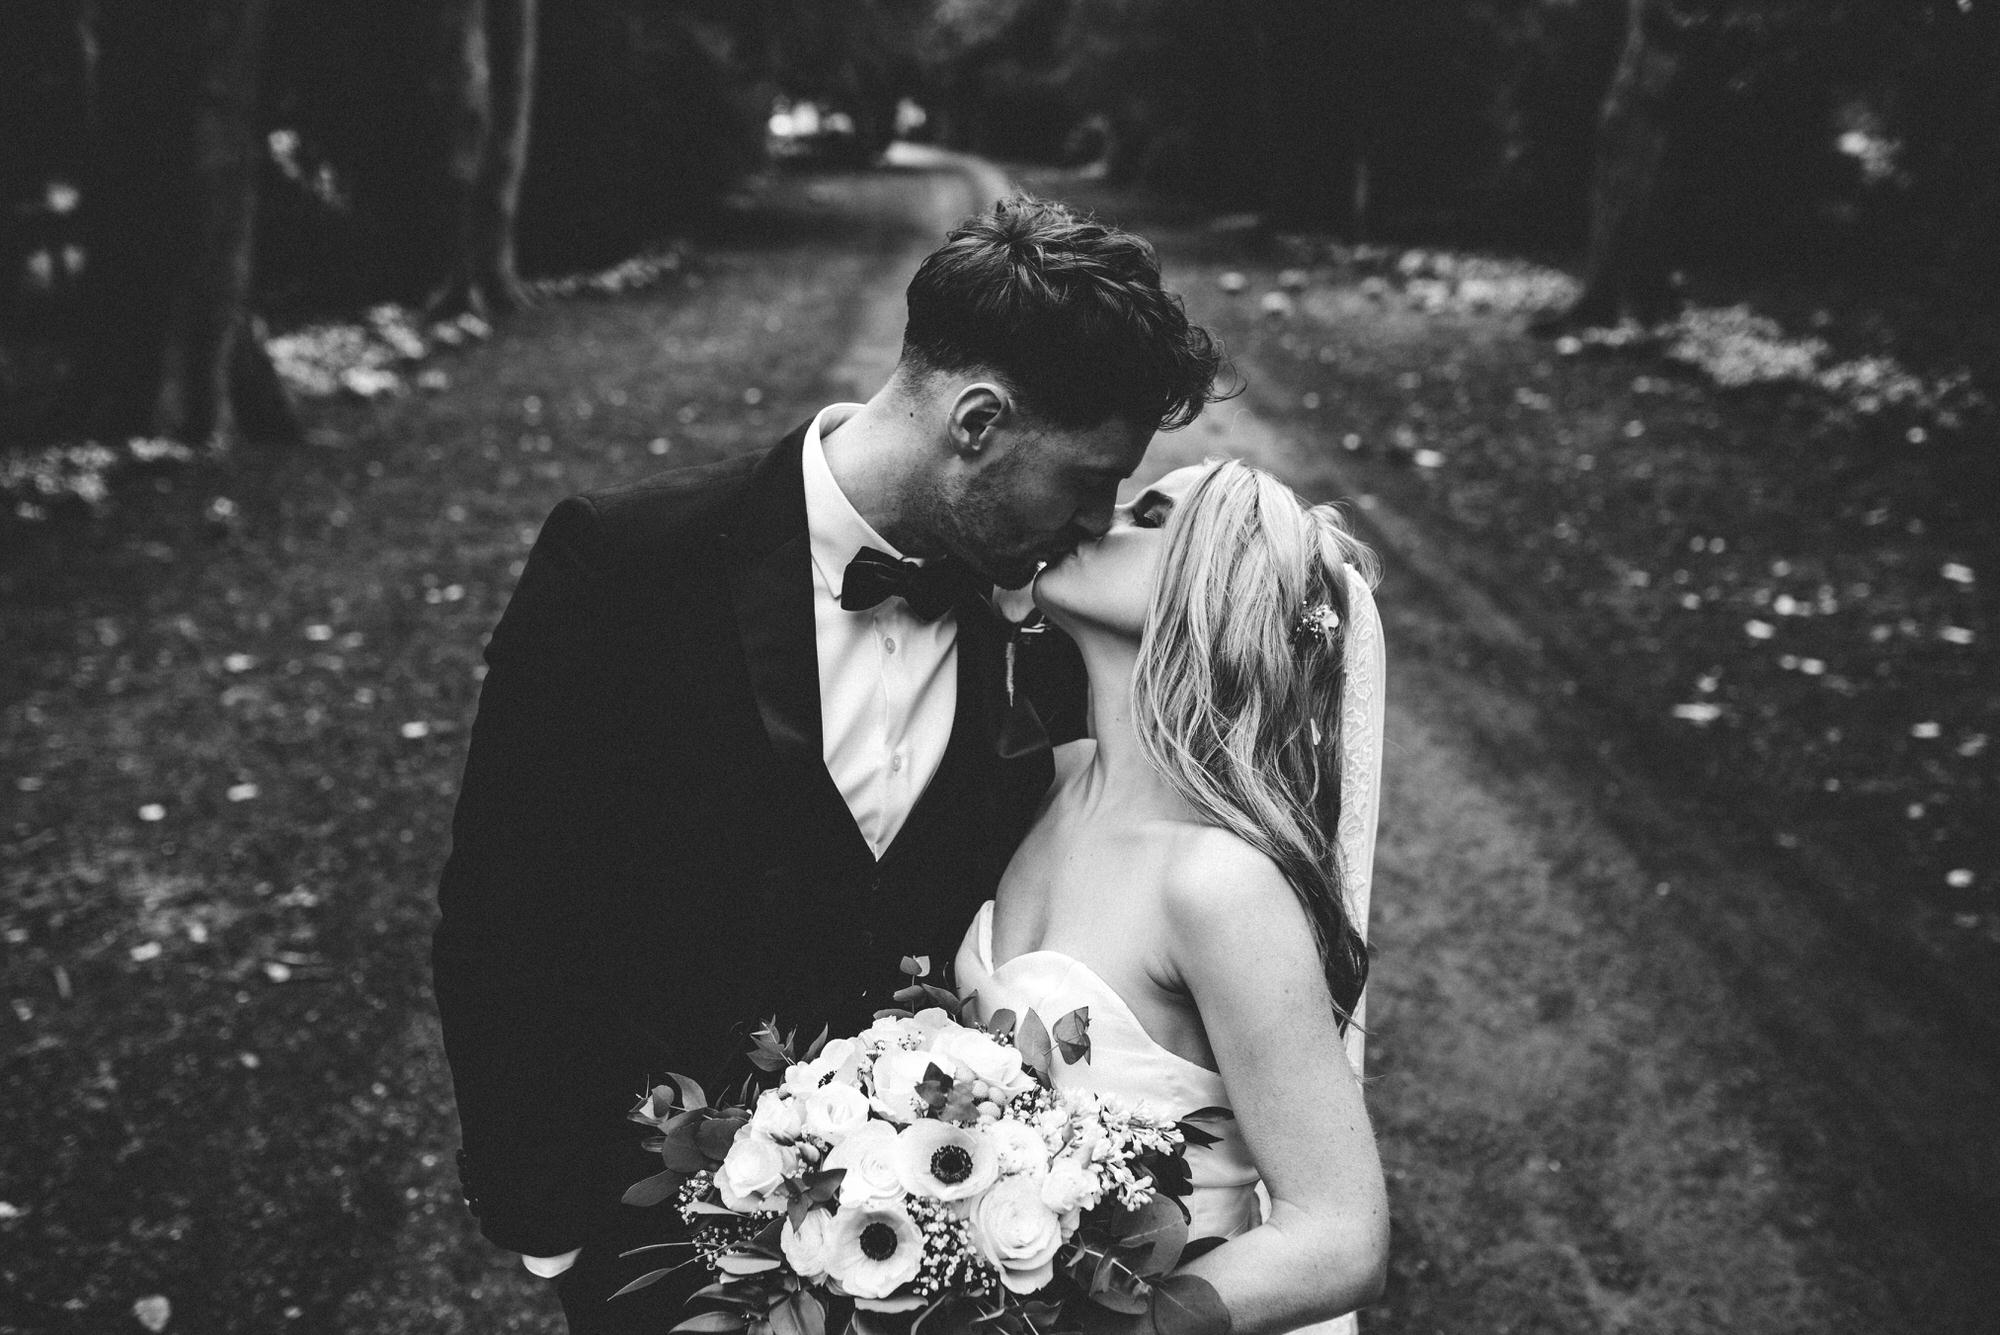 alternative wedding photographer, creative wedding photography, edgy wedding photography 